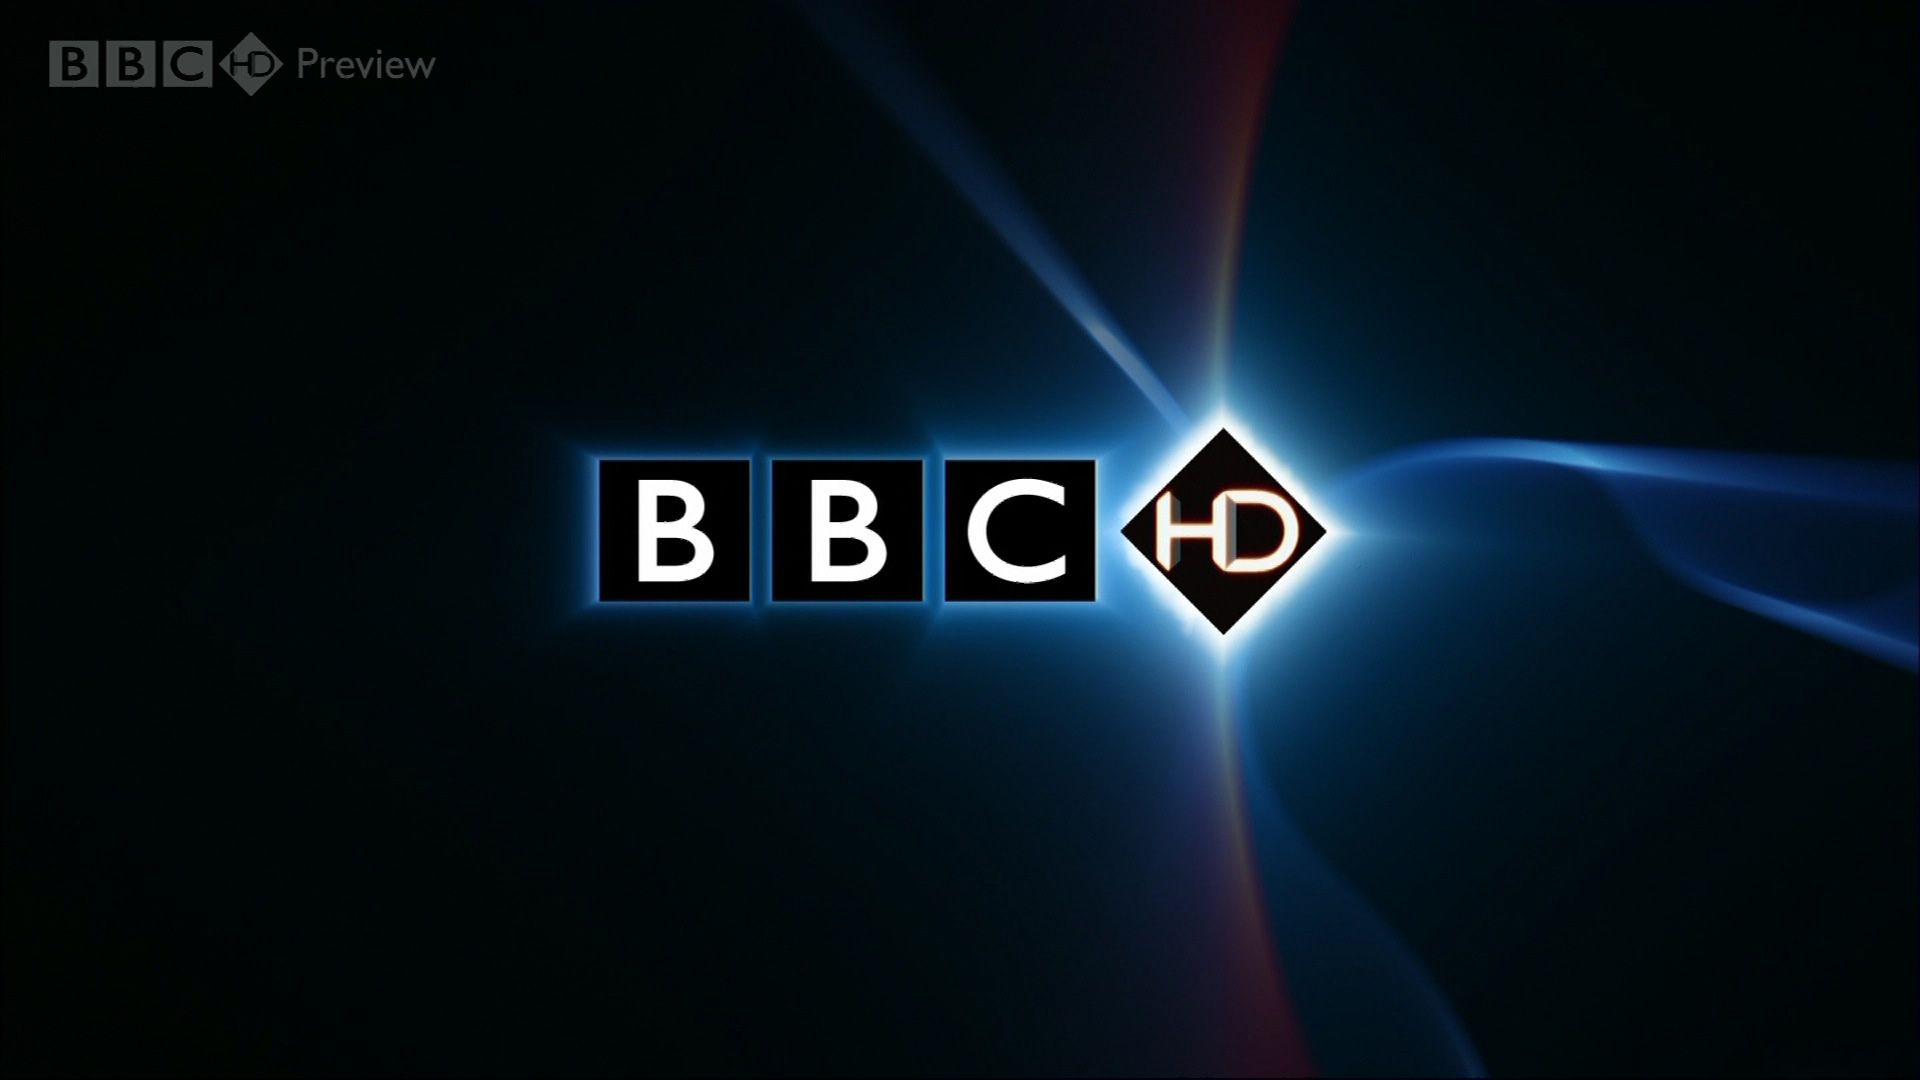 BBC - Comedy - Blackadder Wallpaper